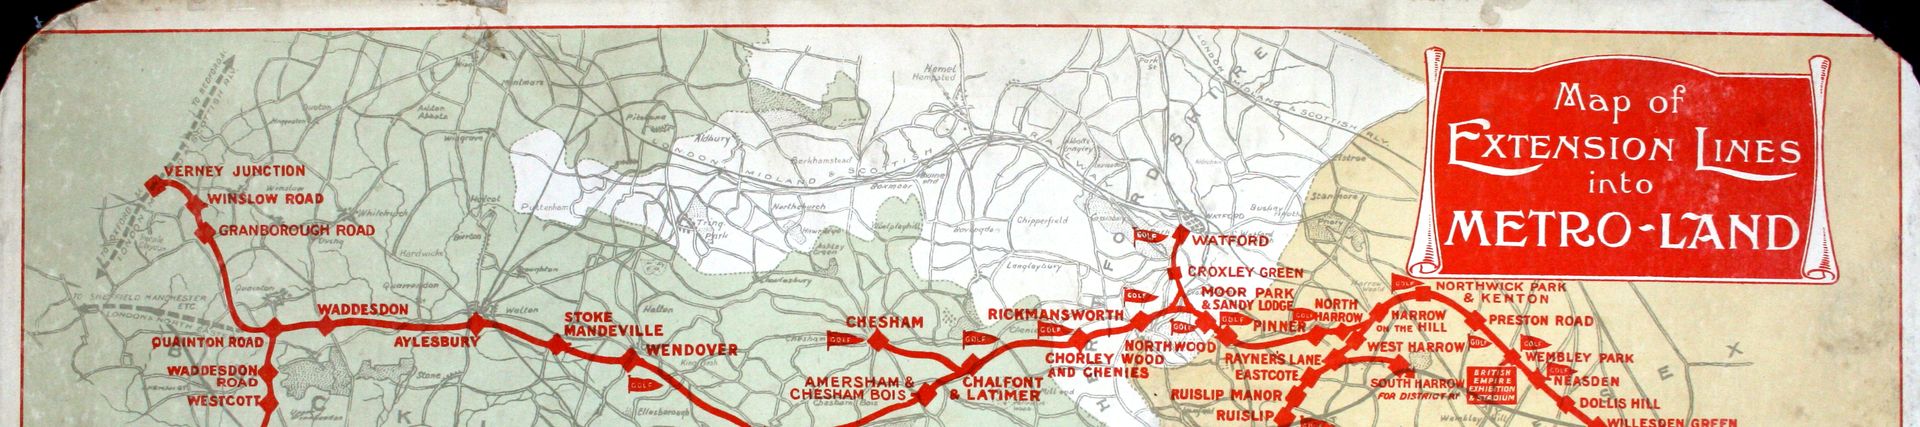 Carriage panel; Metropolitan Railway line extensions into Metro-Land, 1926